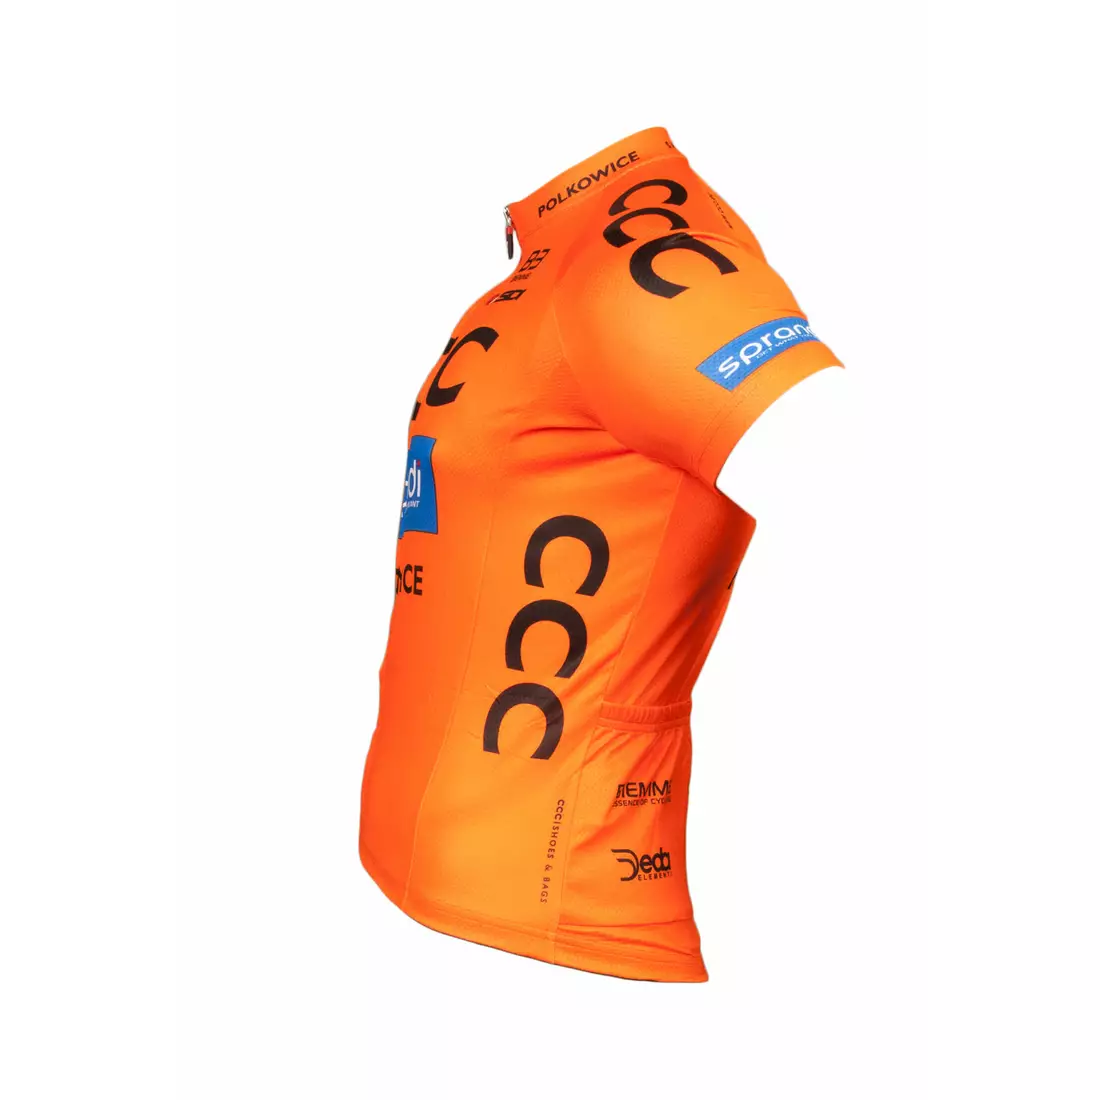 Tricou de ciclism masculin BIEMME CCC SPRANDI POLKOWICE Racing Team 2017